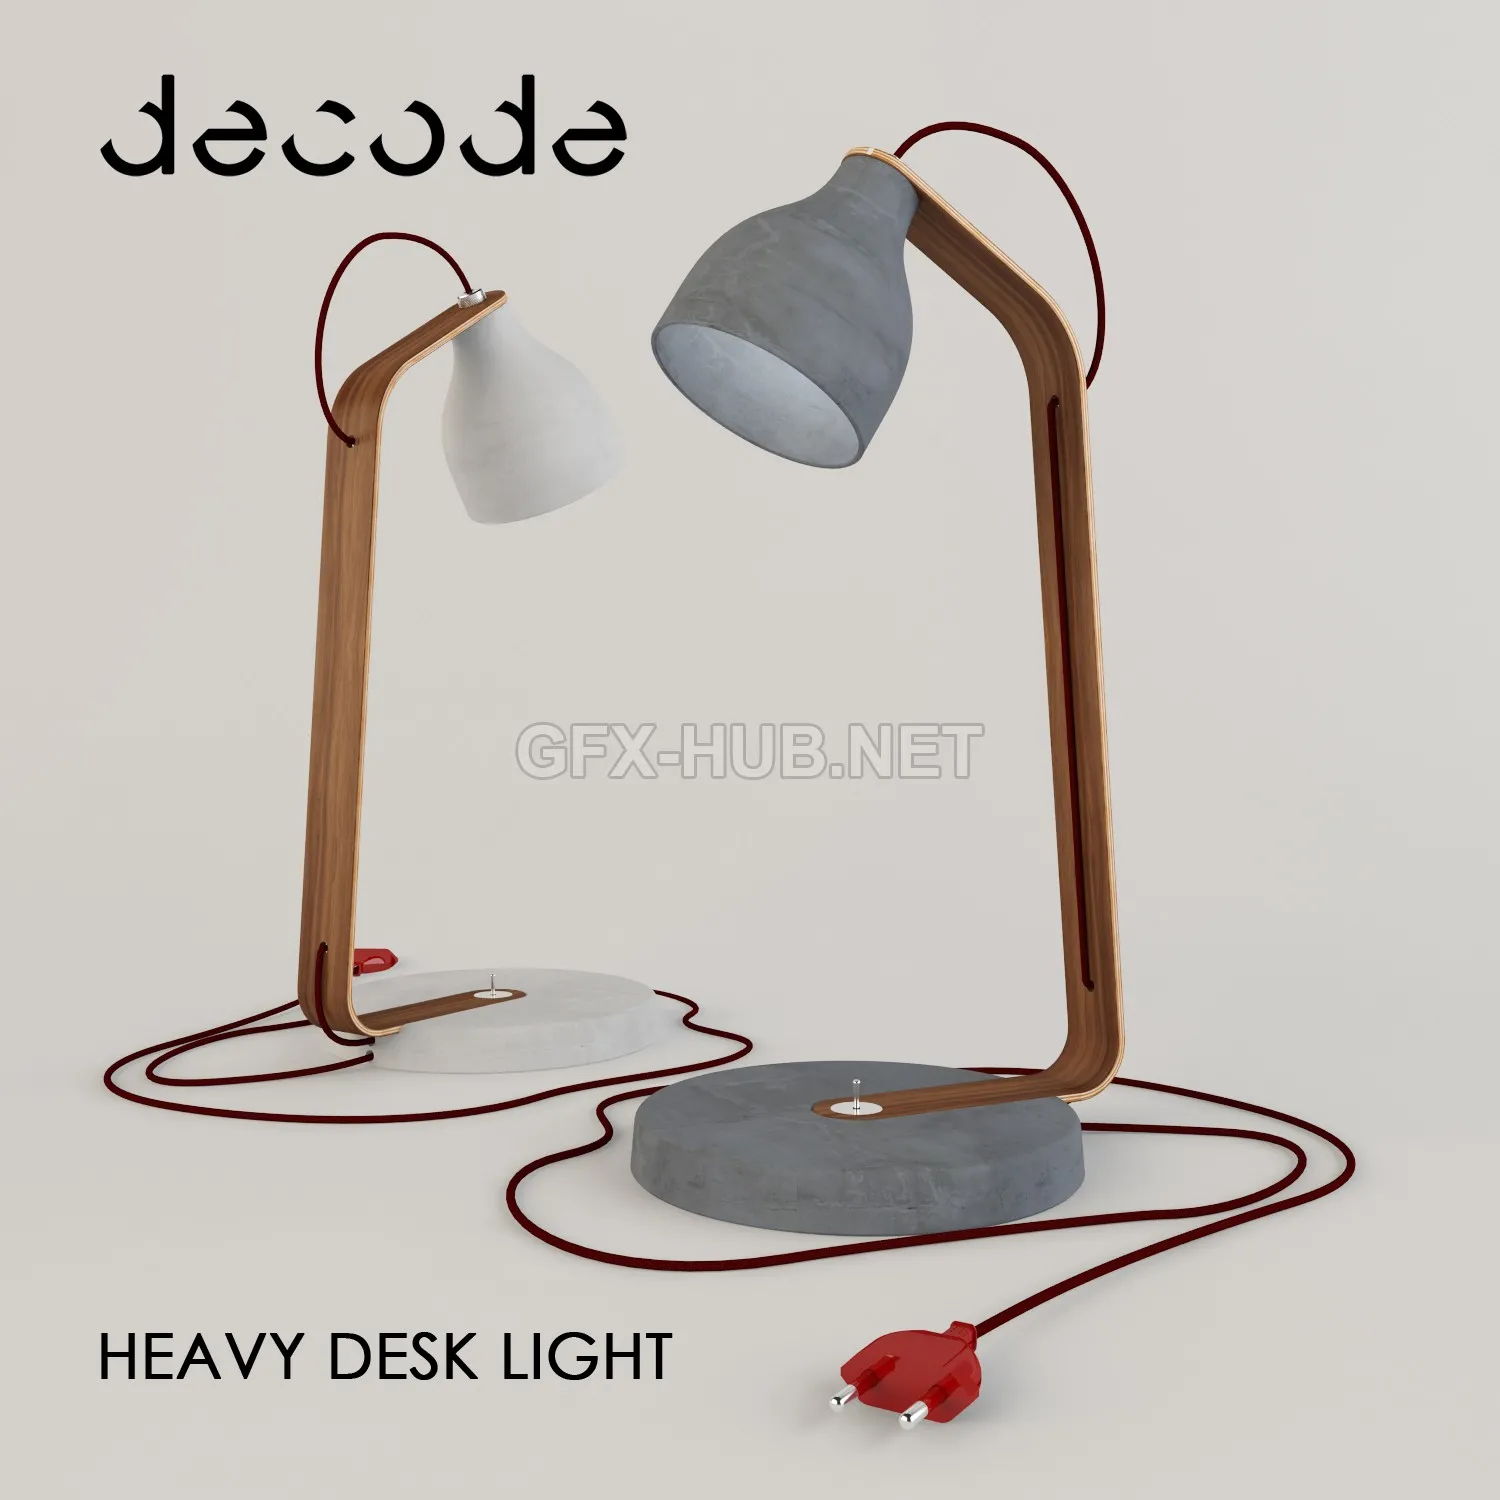 FURNITURE 3D MODELS – Heavy Desk Light by Benjamin Hubert for Decode